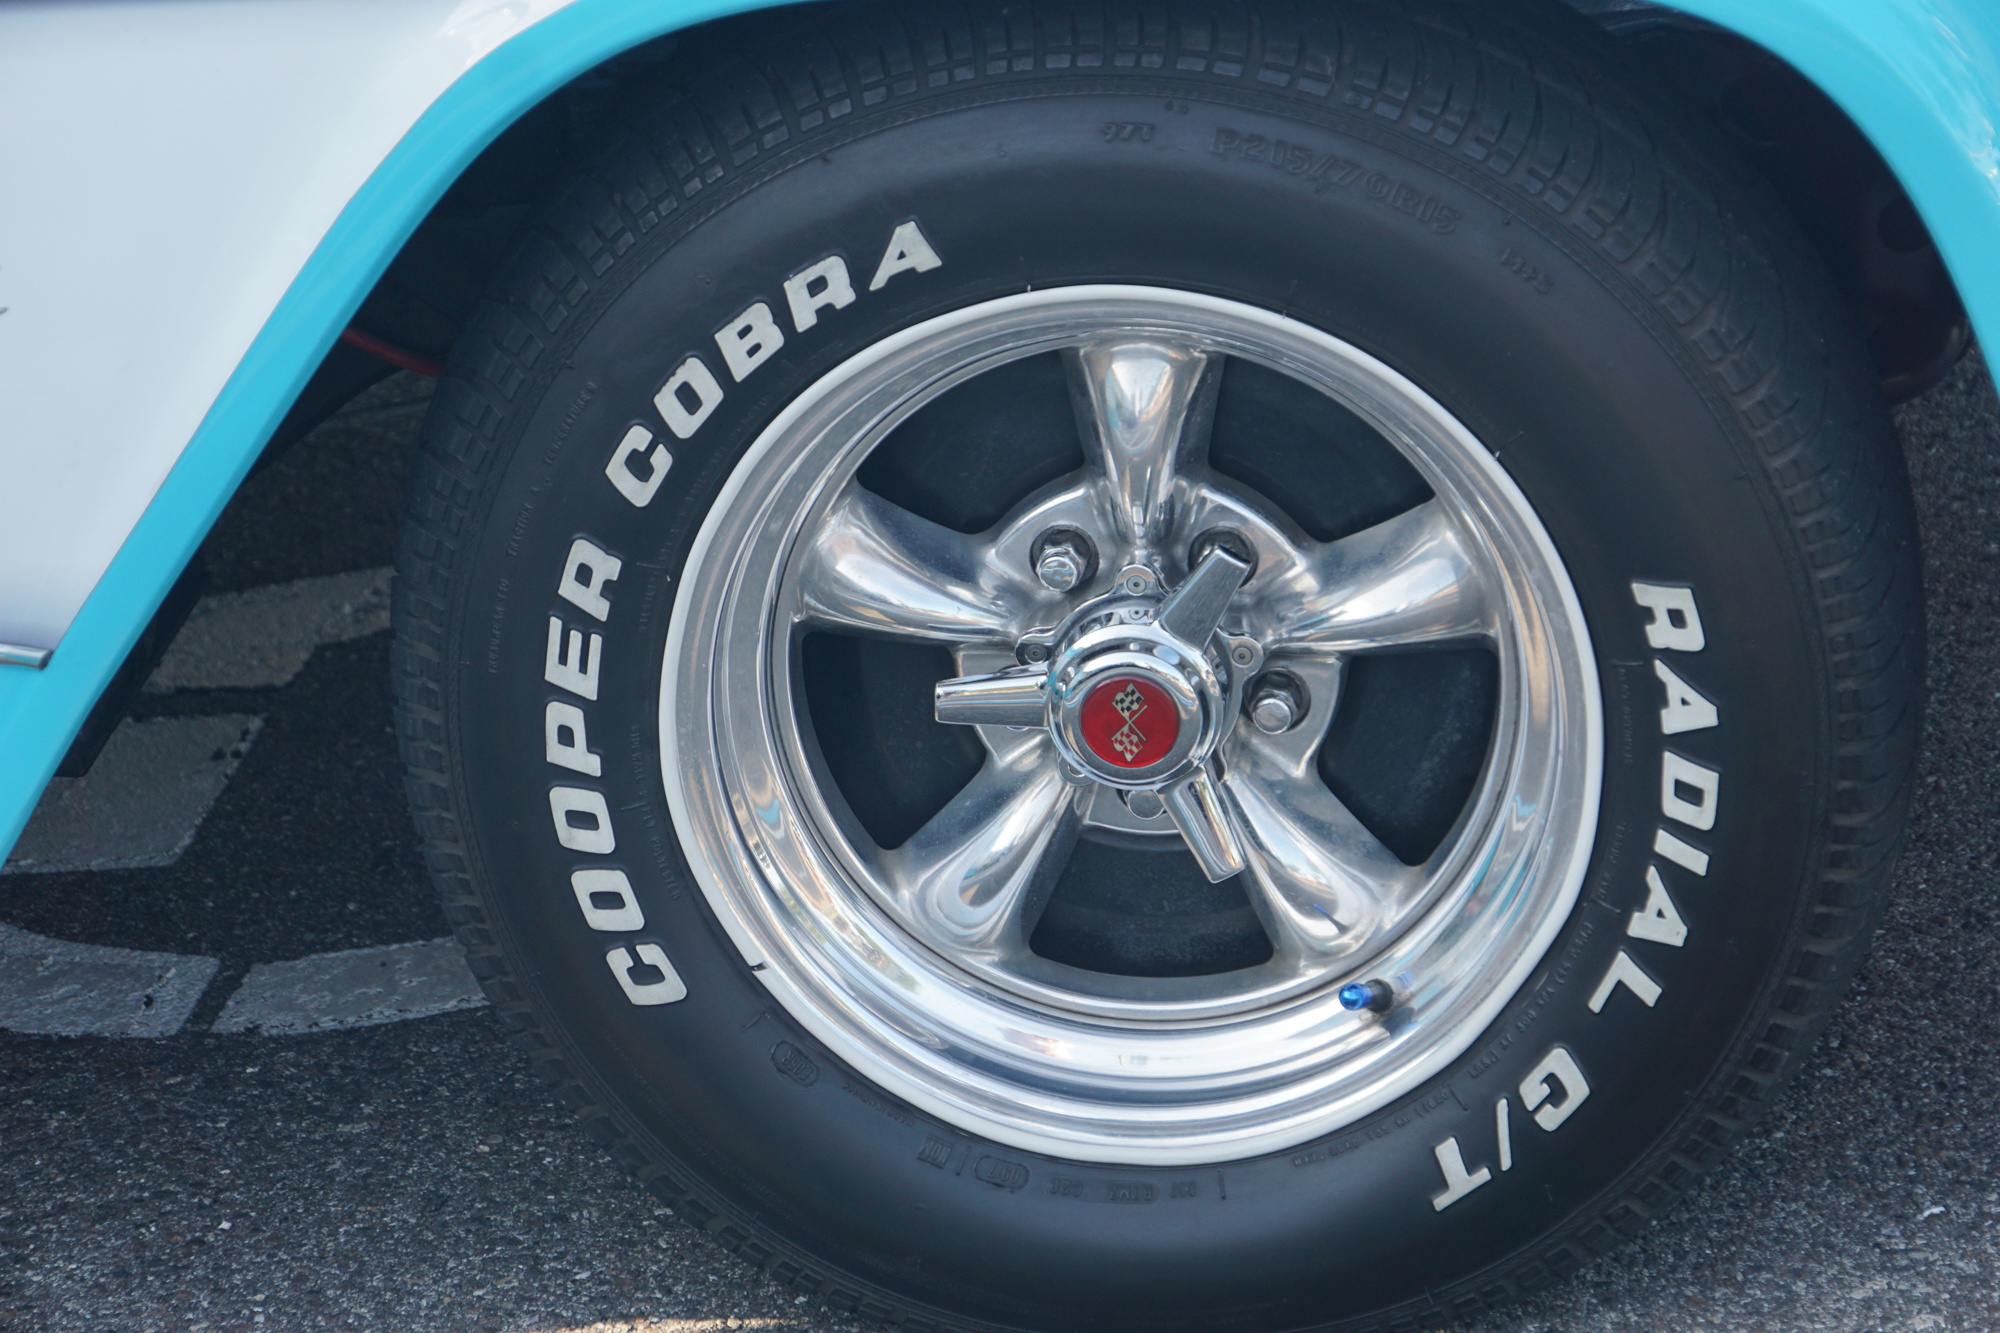 The custom wheels of Robert Alfarone's 1955 Chevrolet pickup truck.